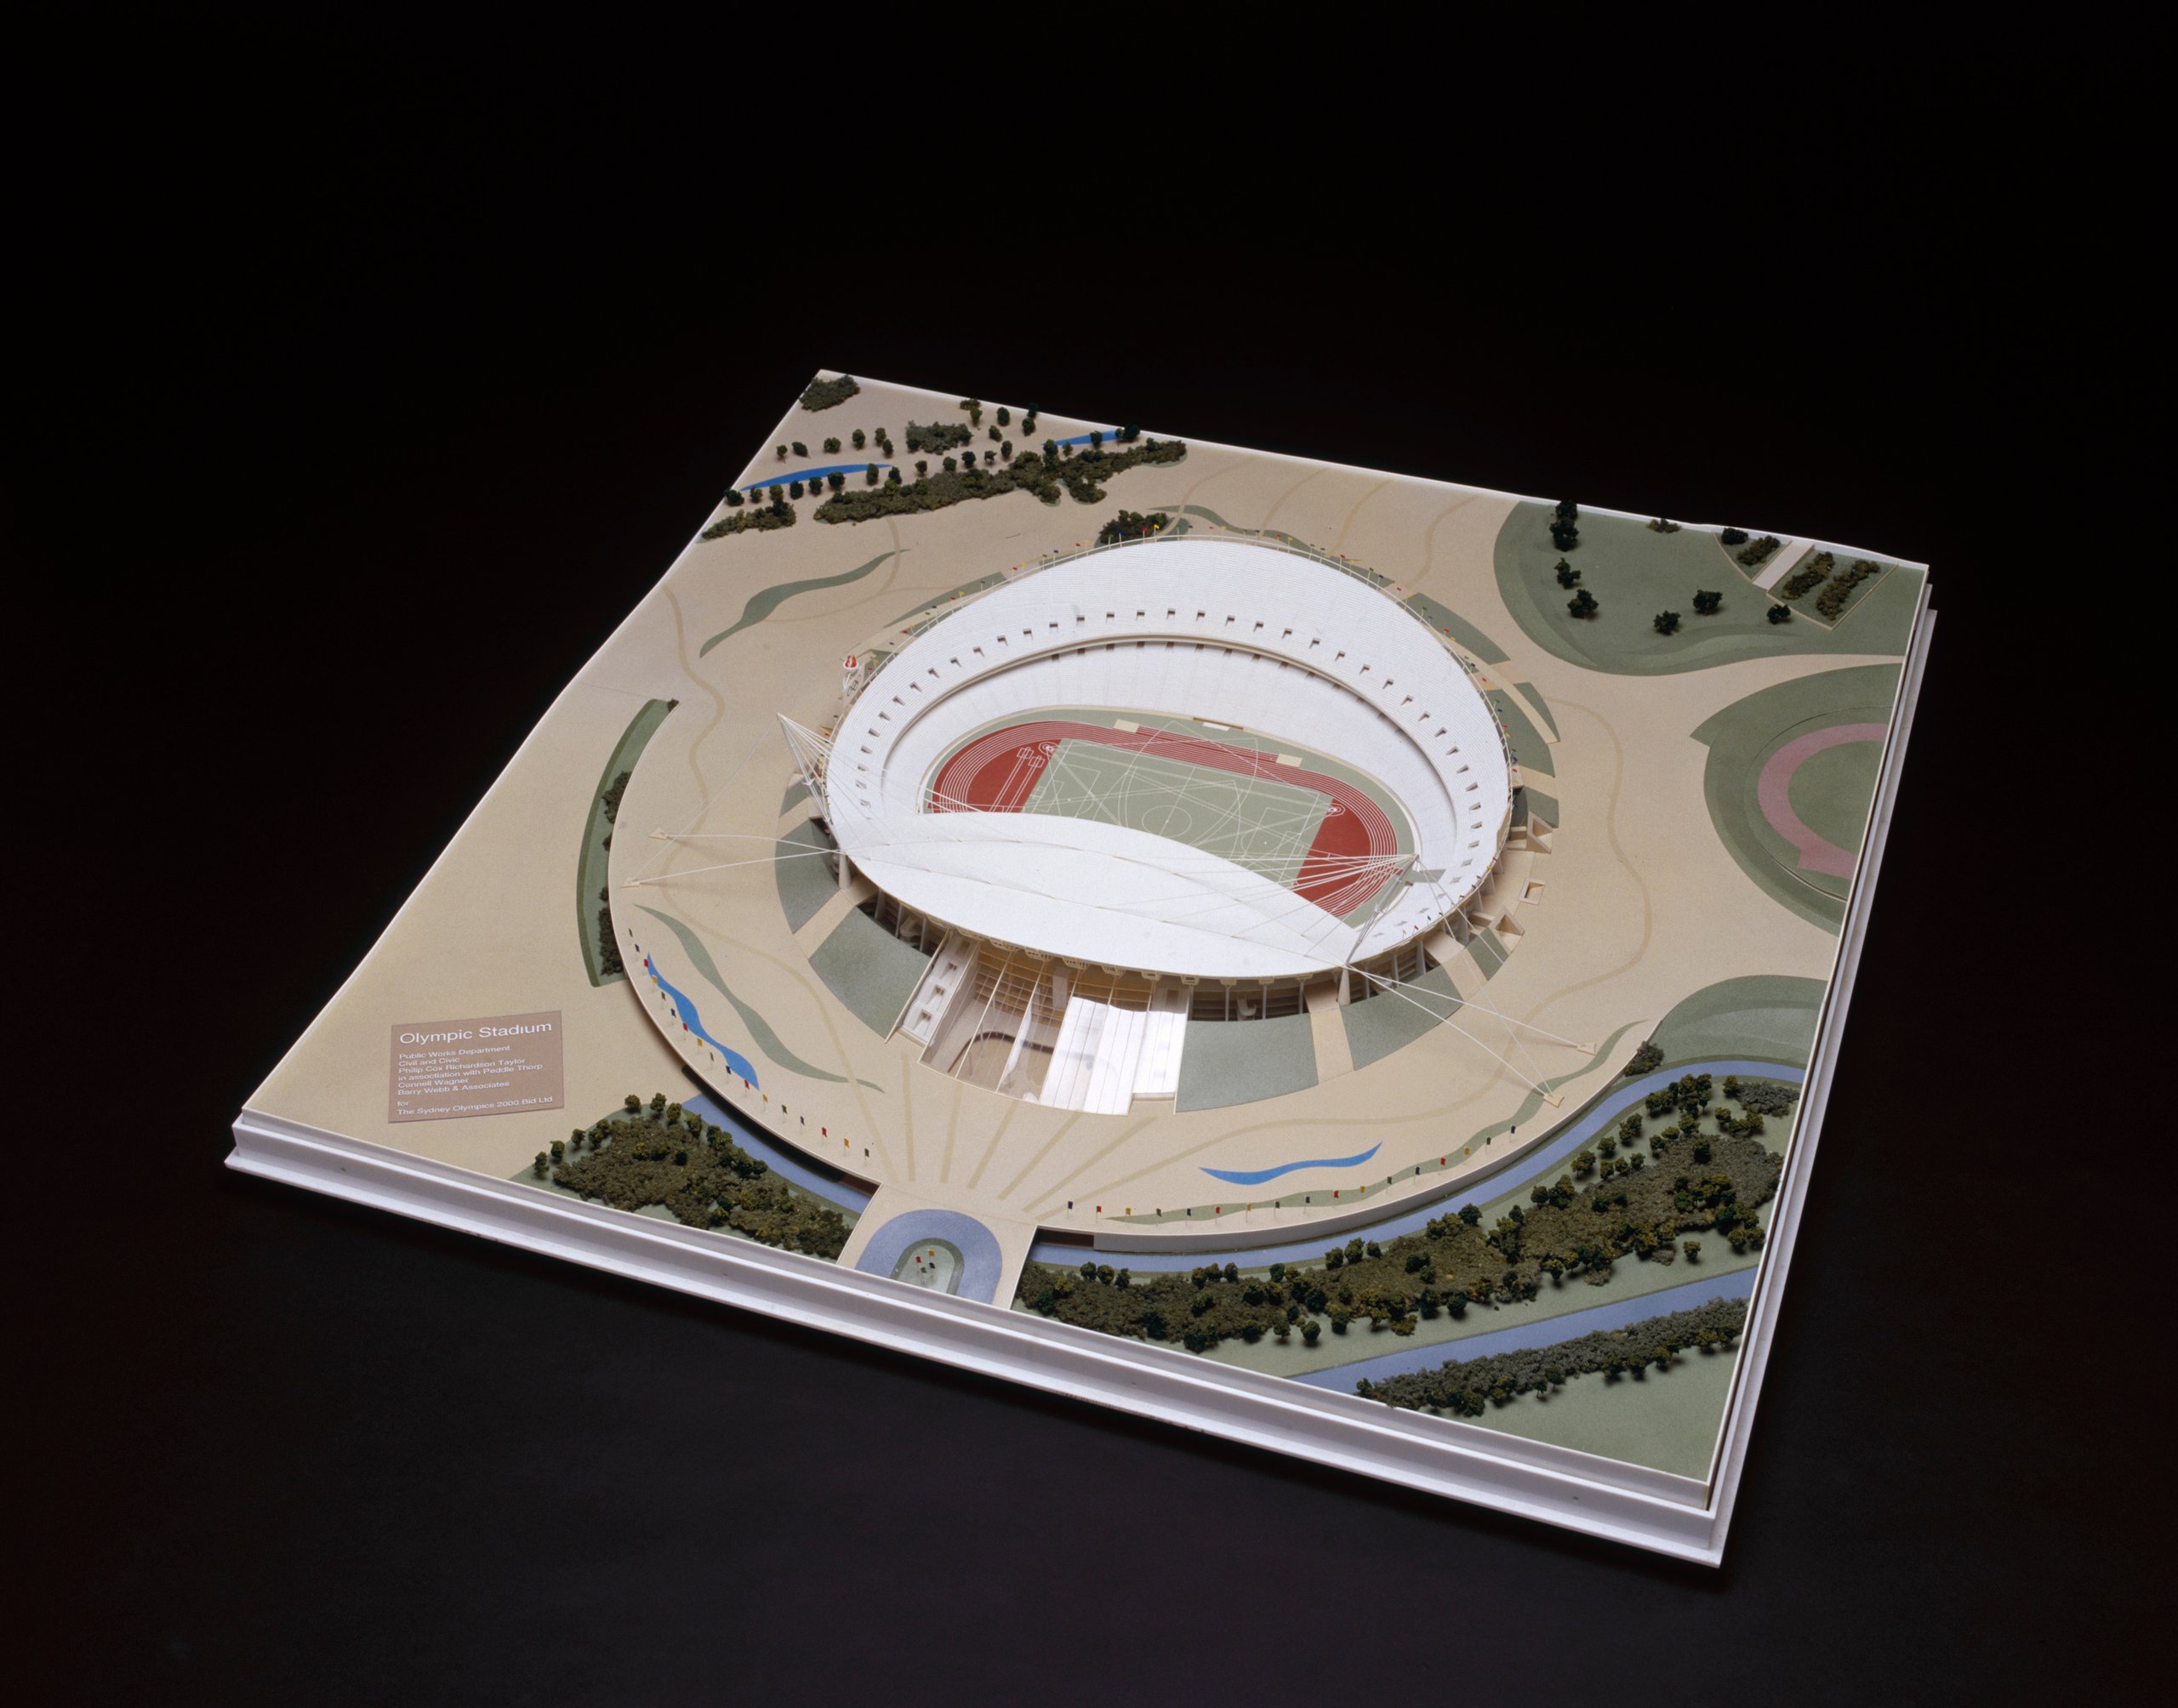 Sydney Olympic Stadium architectural model for the Sydney 2000 Olympic Games bid